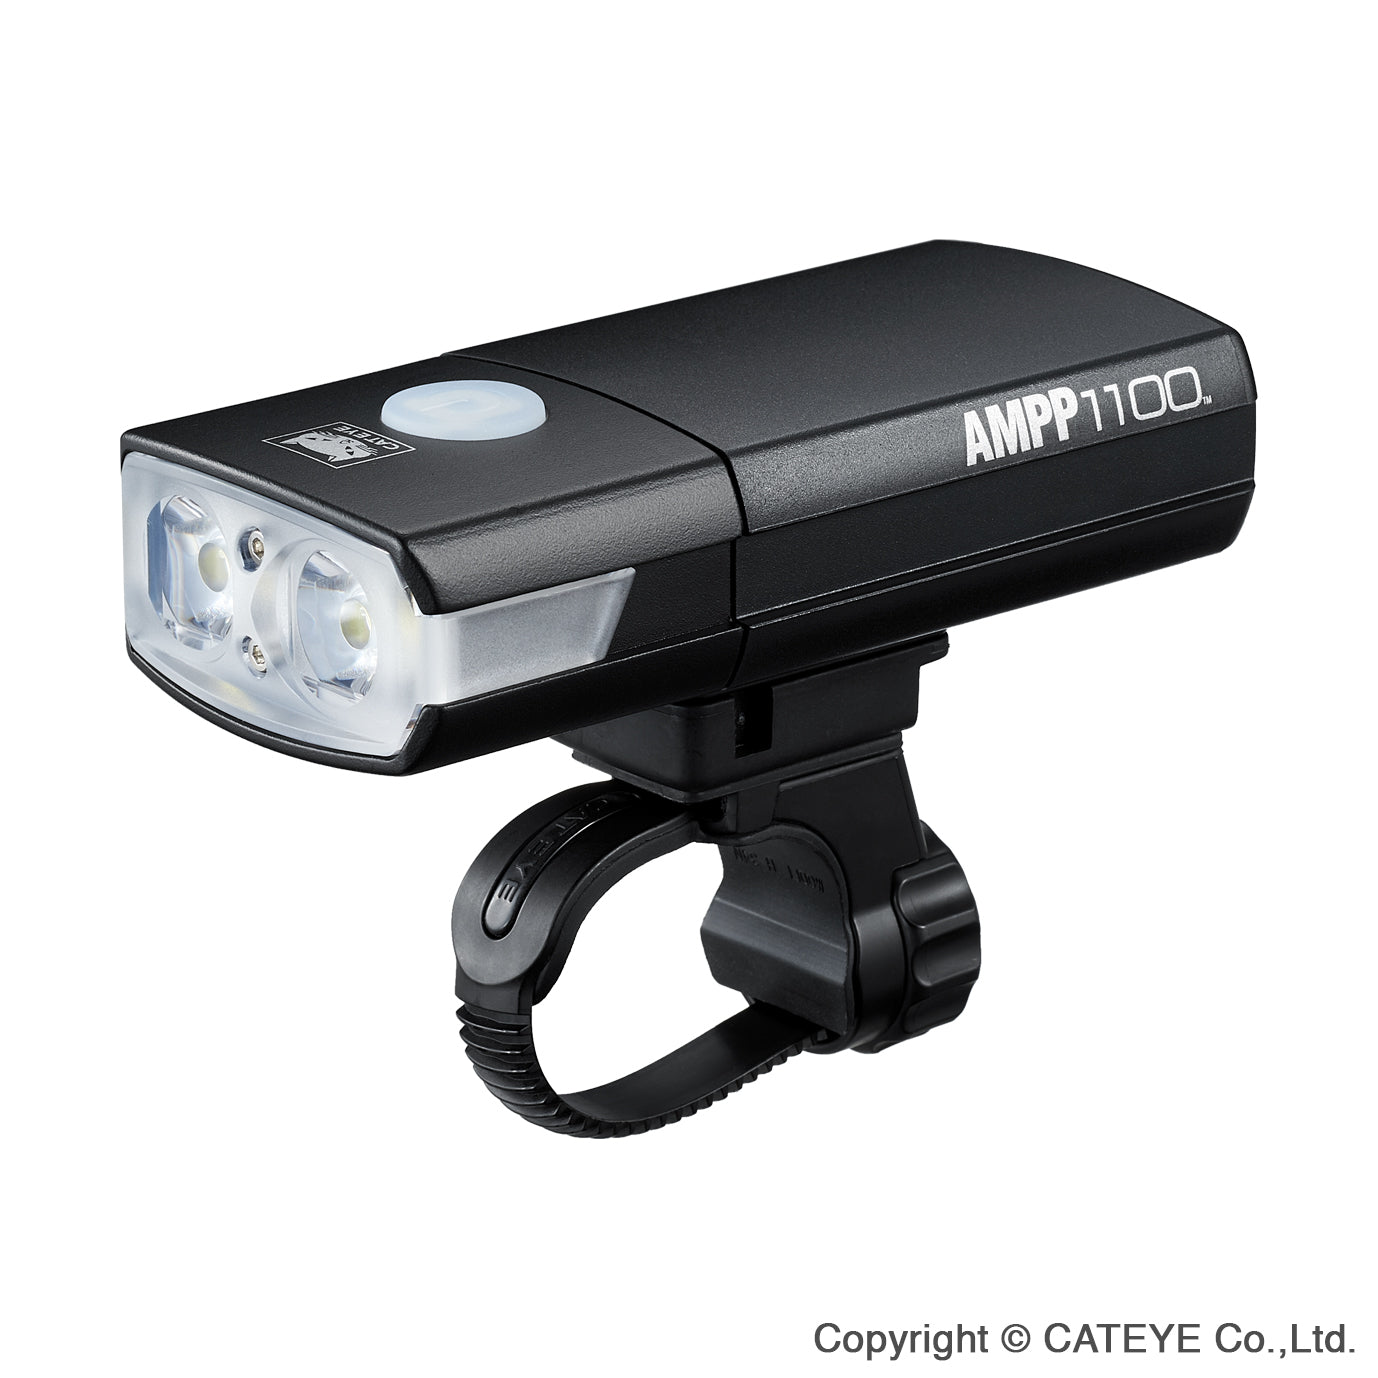 CATEYE USB rechargeable headlight~AMPP1100~HL-EL1100RC/ CATEYE RECHARGEABLE HEADLIGHT~AMPP1100~HL-EL1100RC